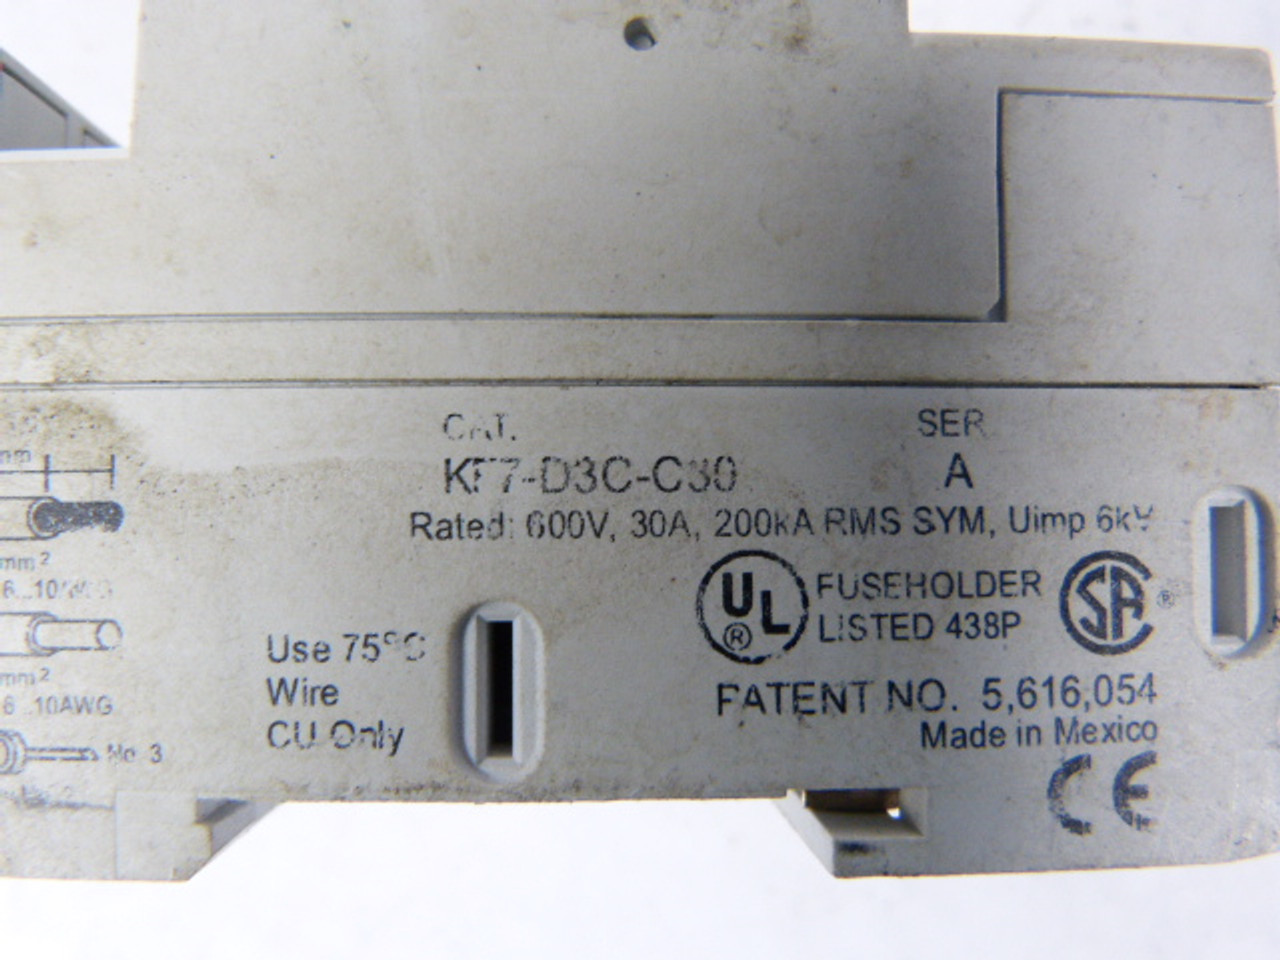 Sprecher + Schuh KF7-D3C-C30 Fuse Holder 30A 600V 3-Pole Type CC USED